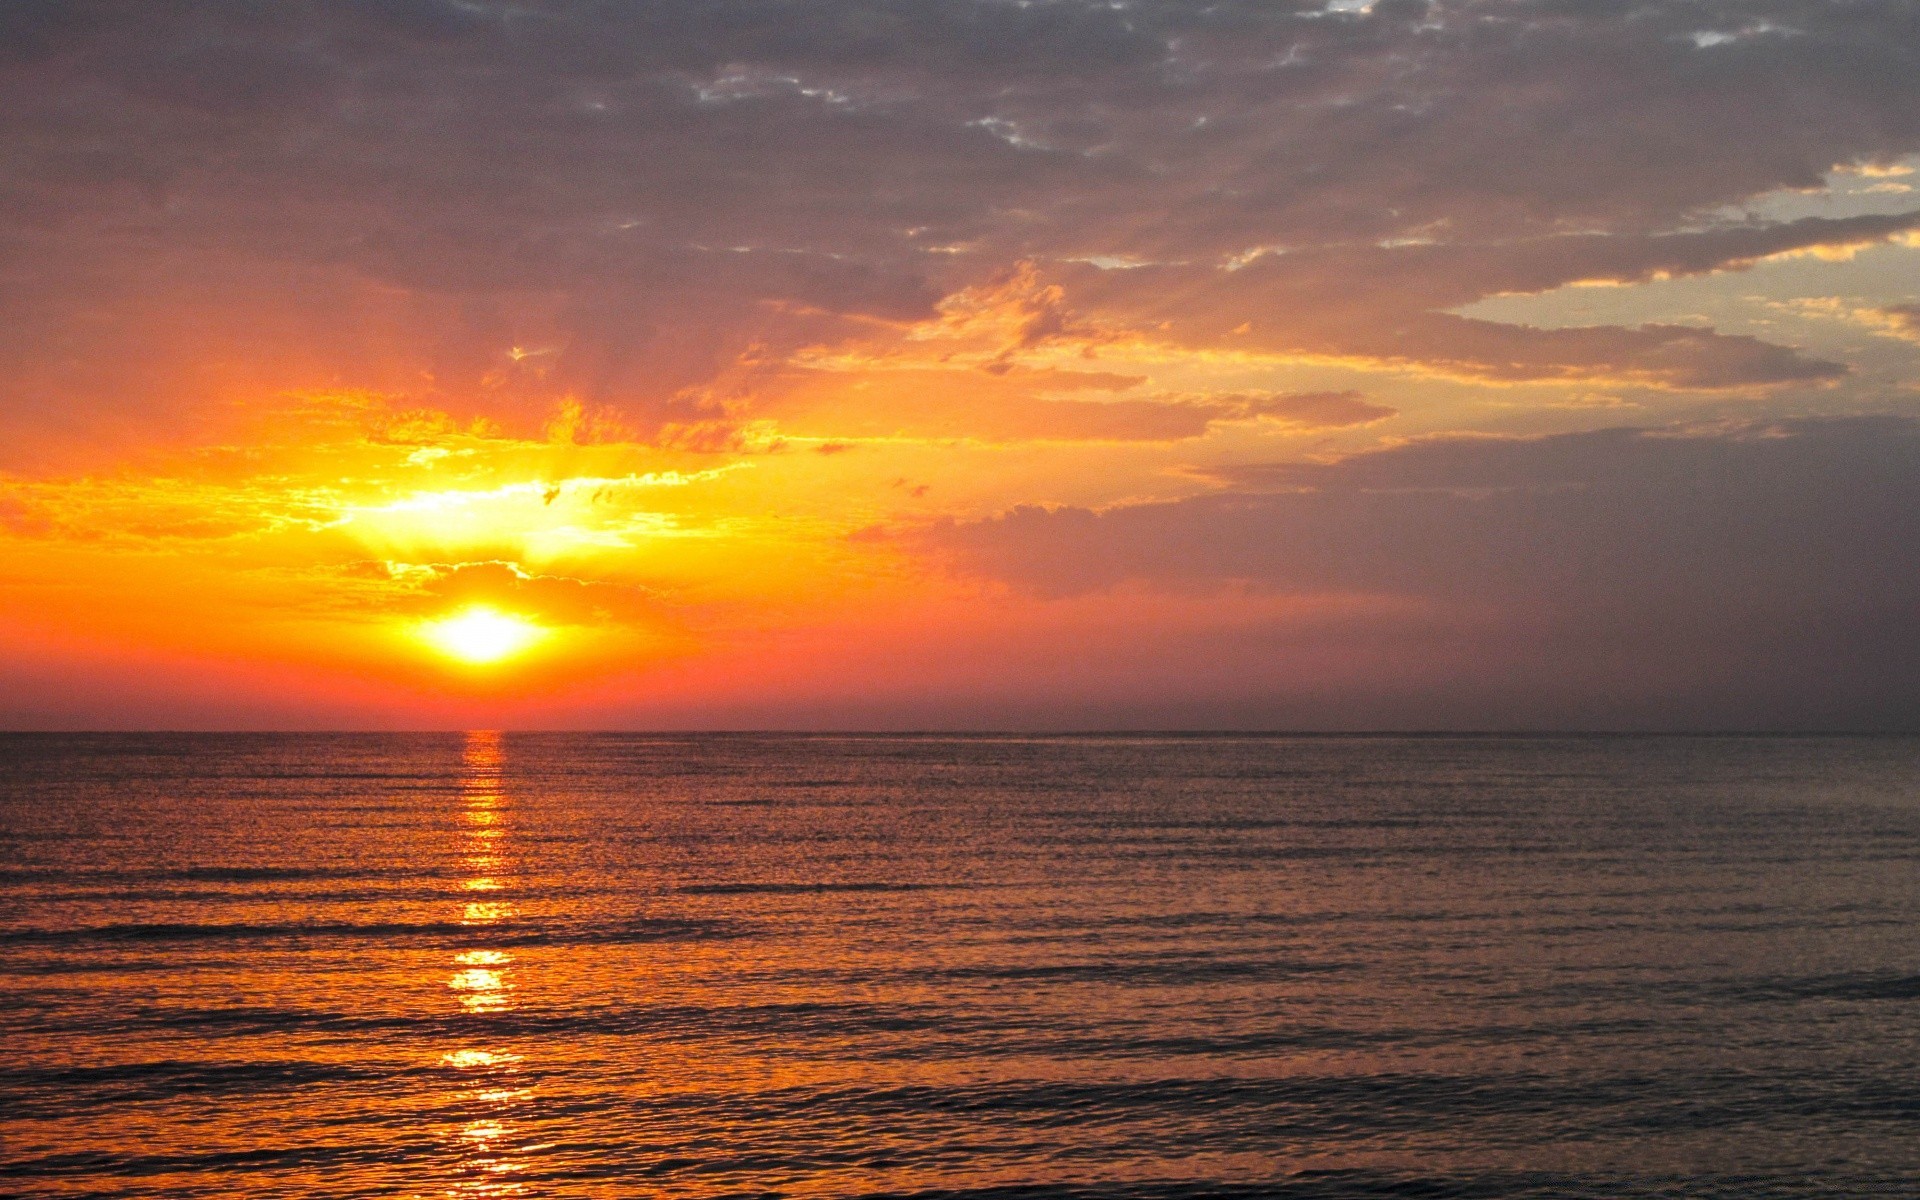 asia sunset dawn sun water dusk sea evening ocean beach fair weather sky landscape seascape summer nature